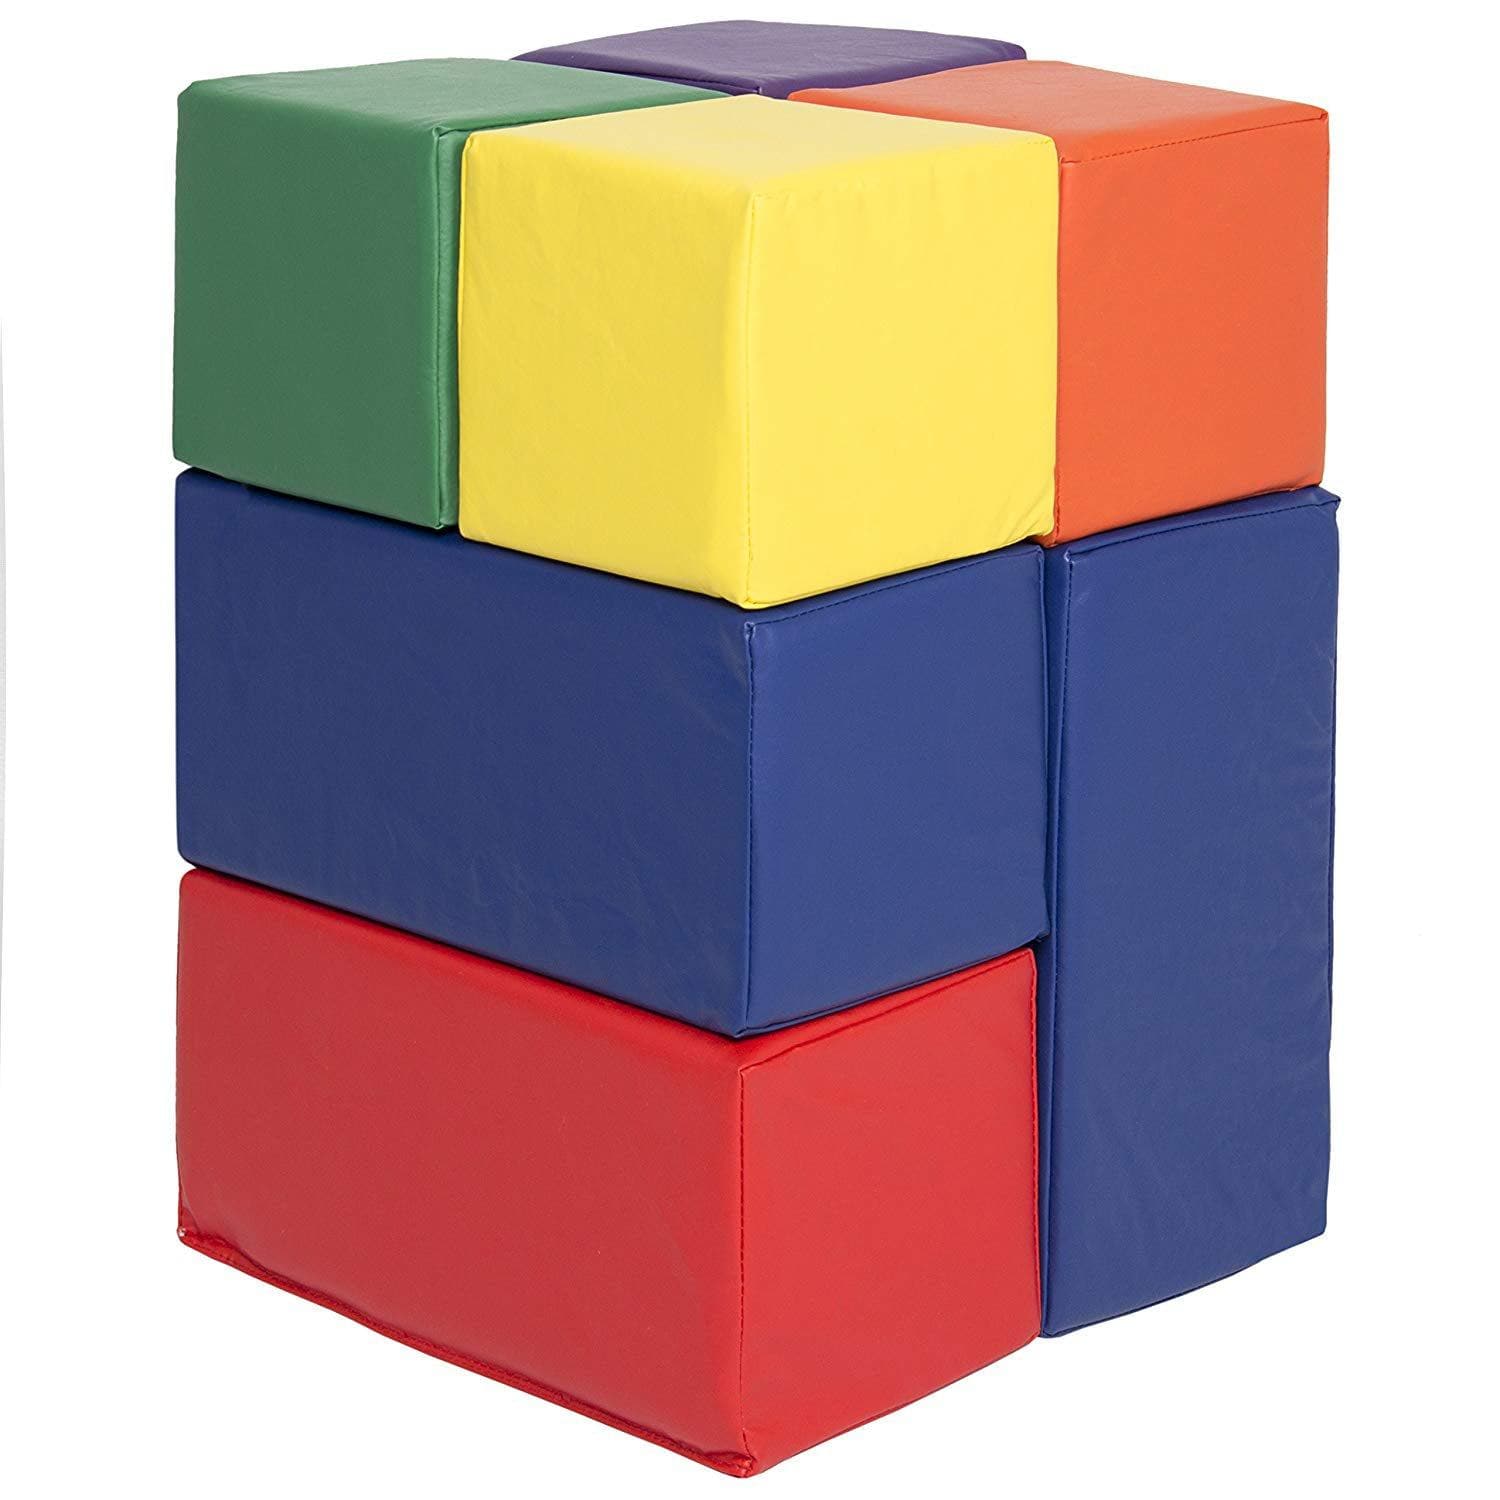 YOZZI Soft Block Playset Safe Active Toys Playroom Building Blocks 7 Piece